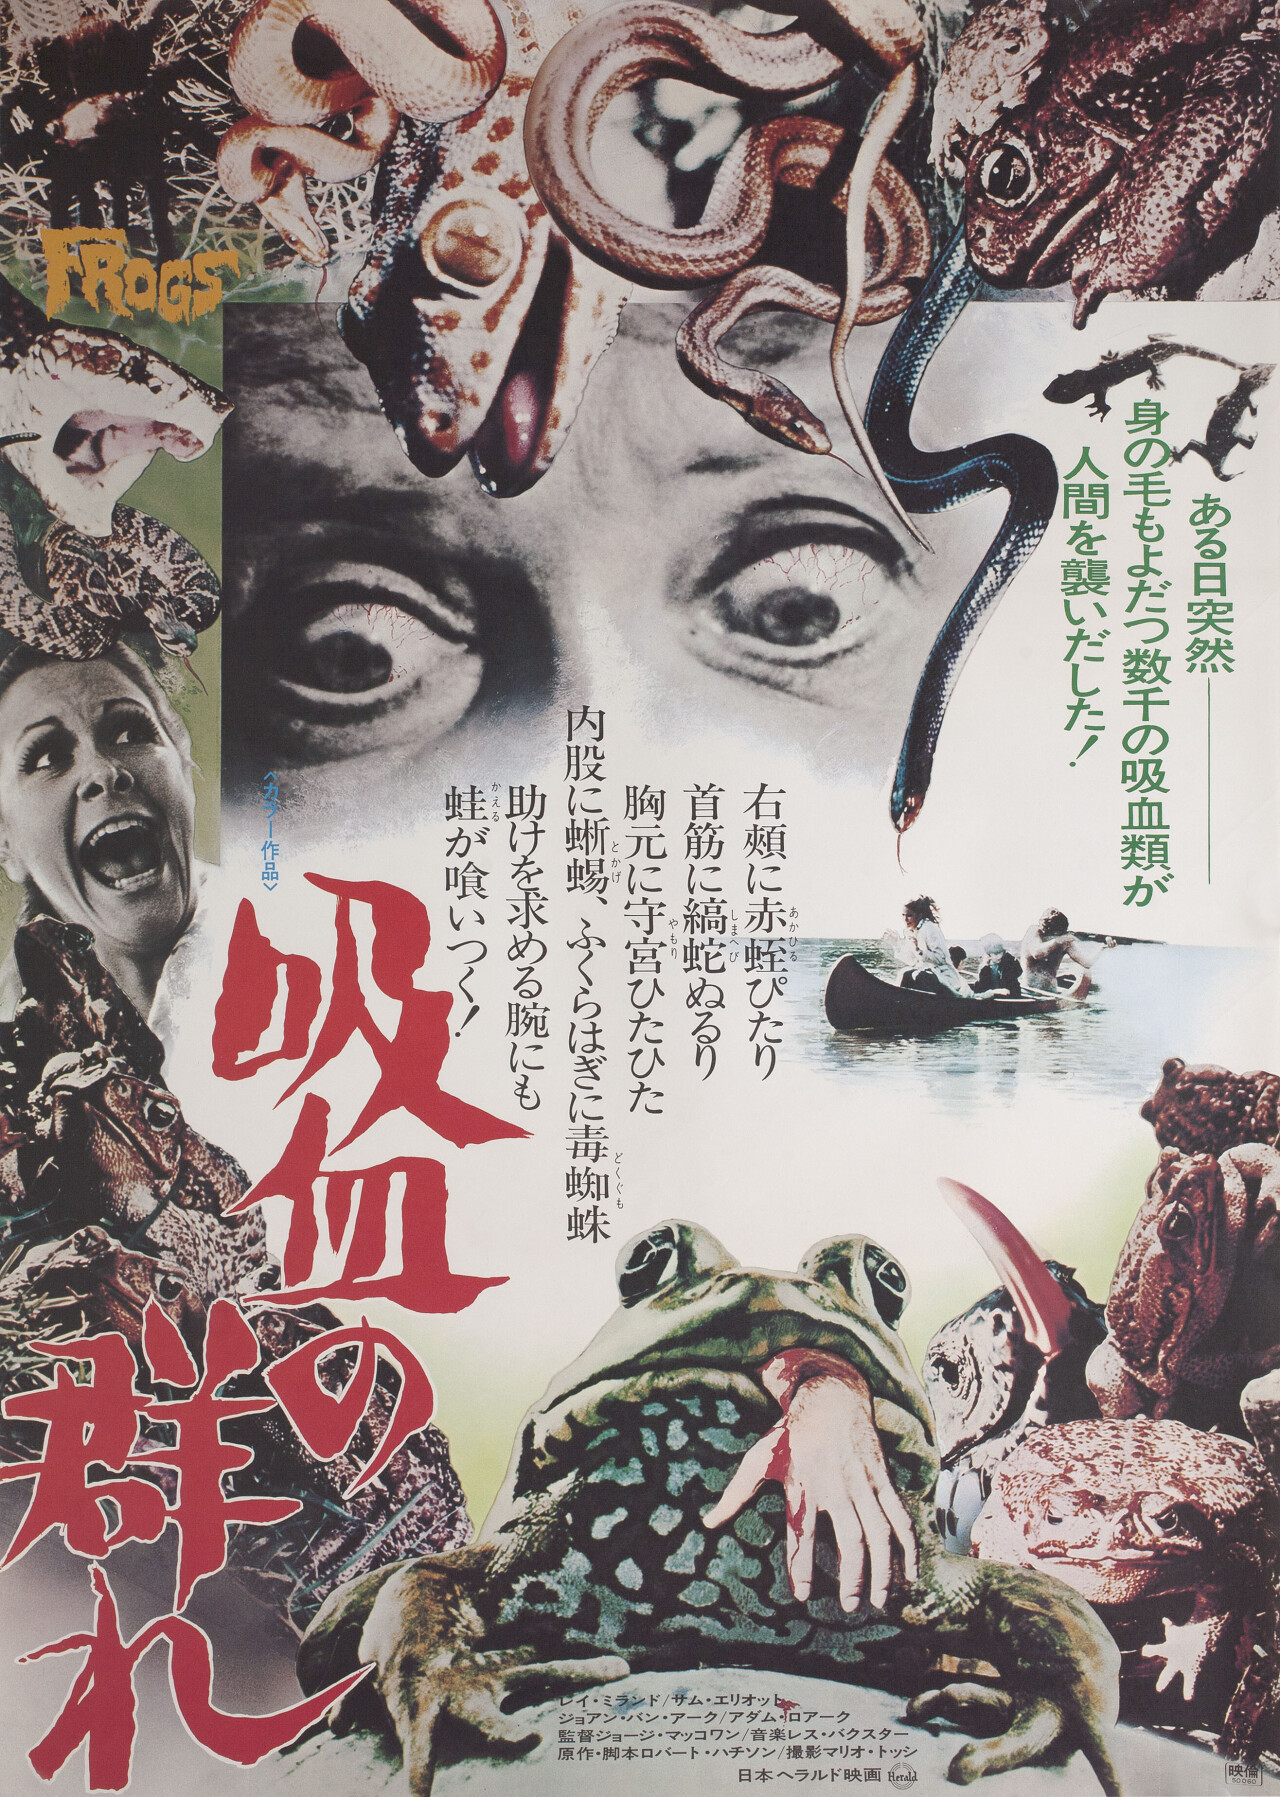 Лягушки (Frogs, 1972), режиссёр Джордж МакКоуэн, японский постер к фильму (ужасы, 1975 год)